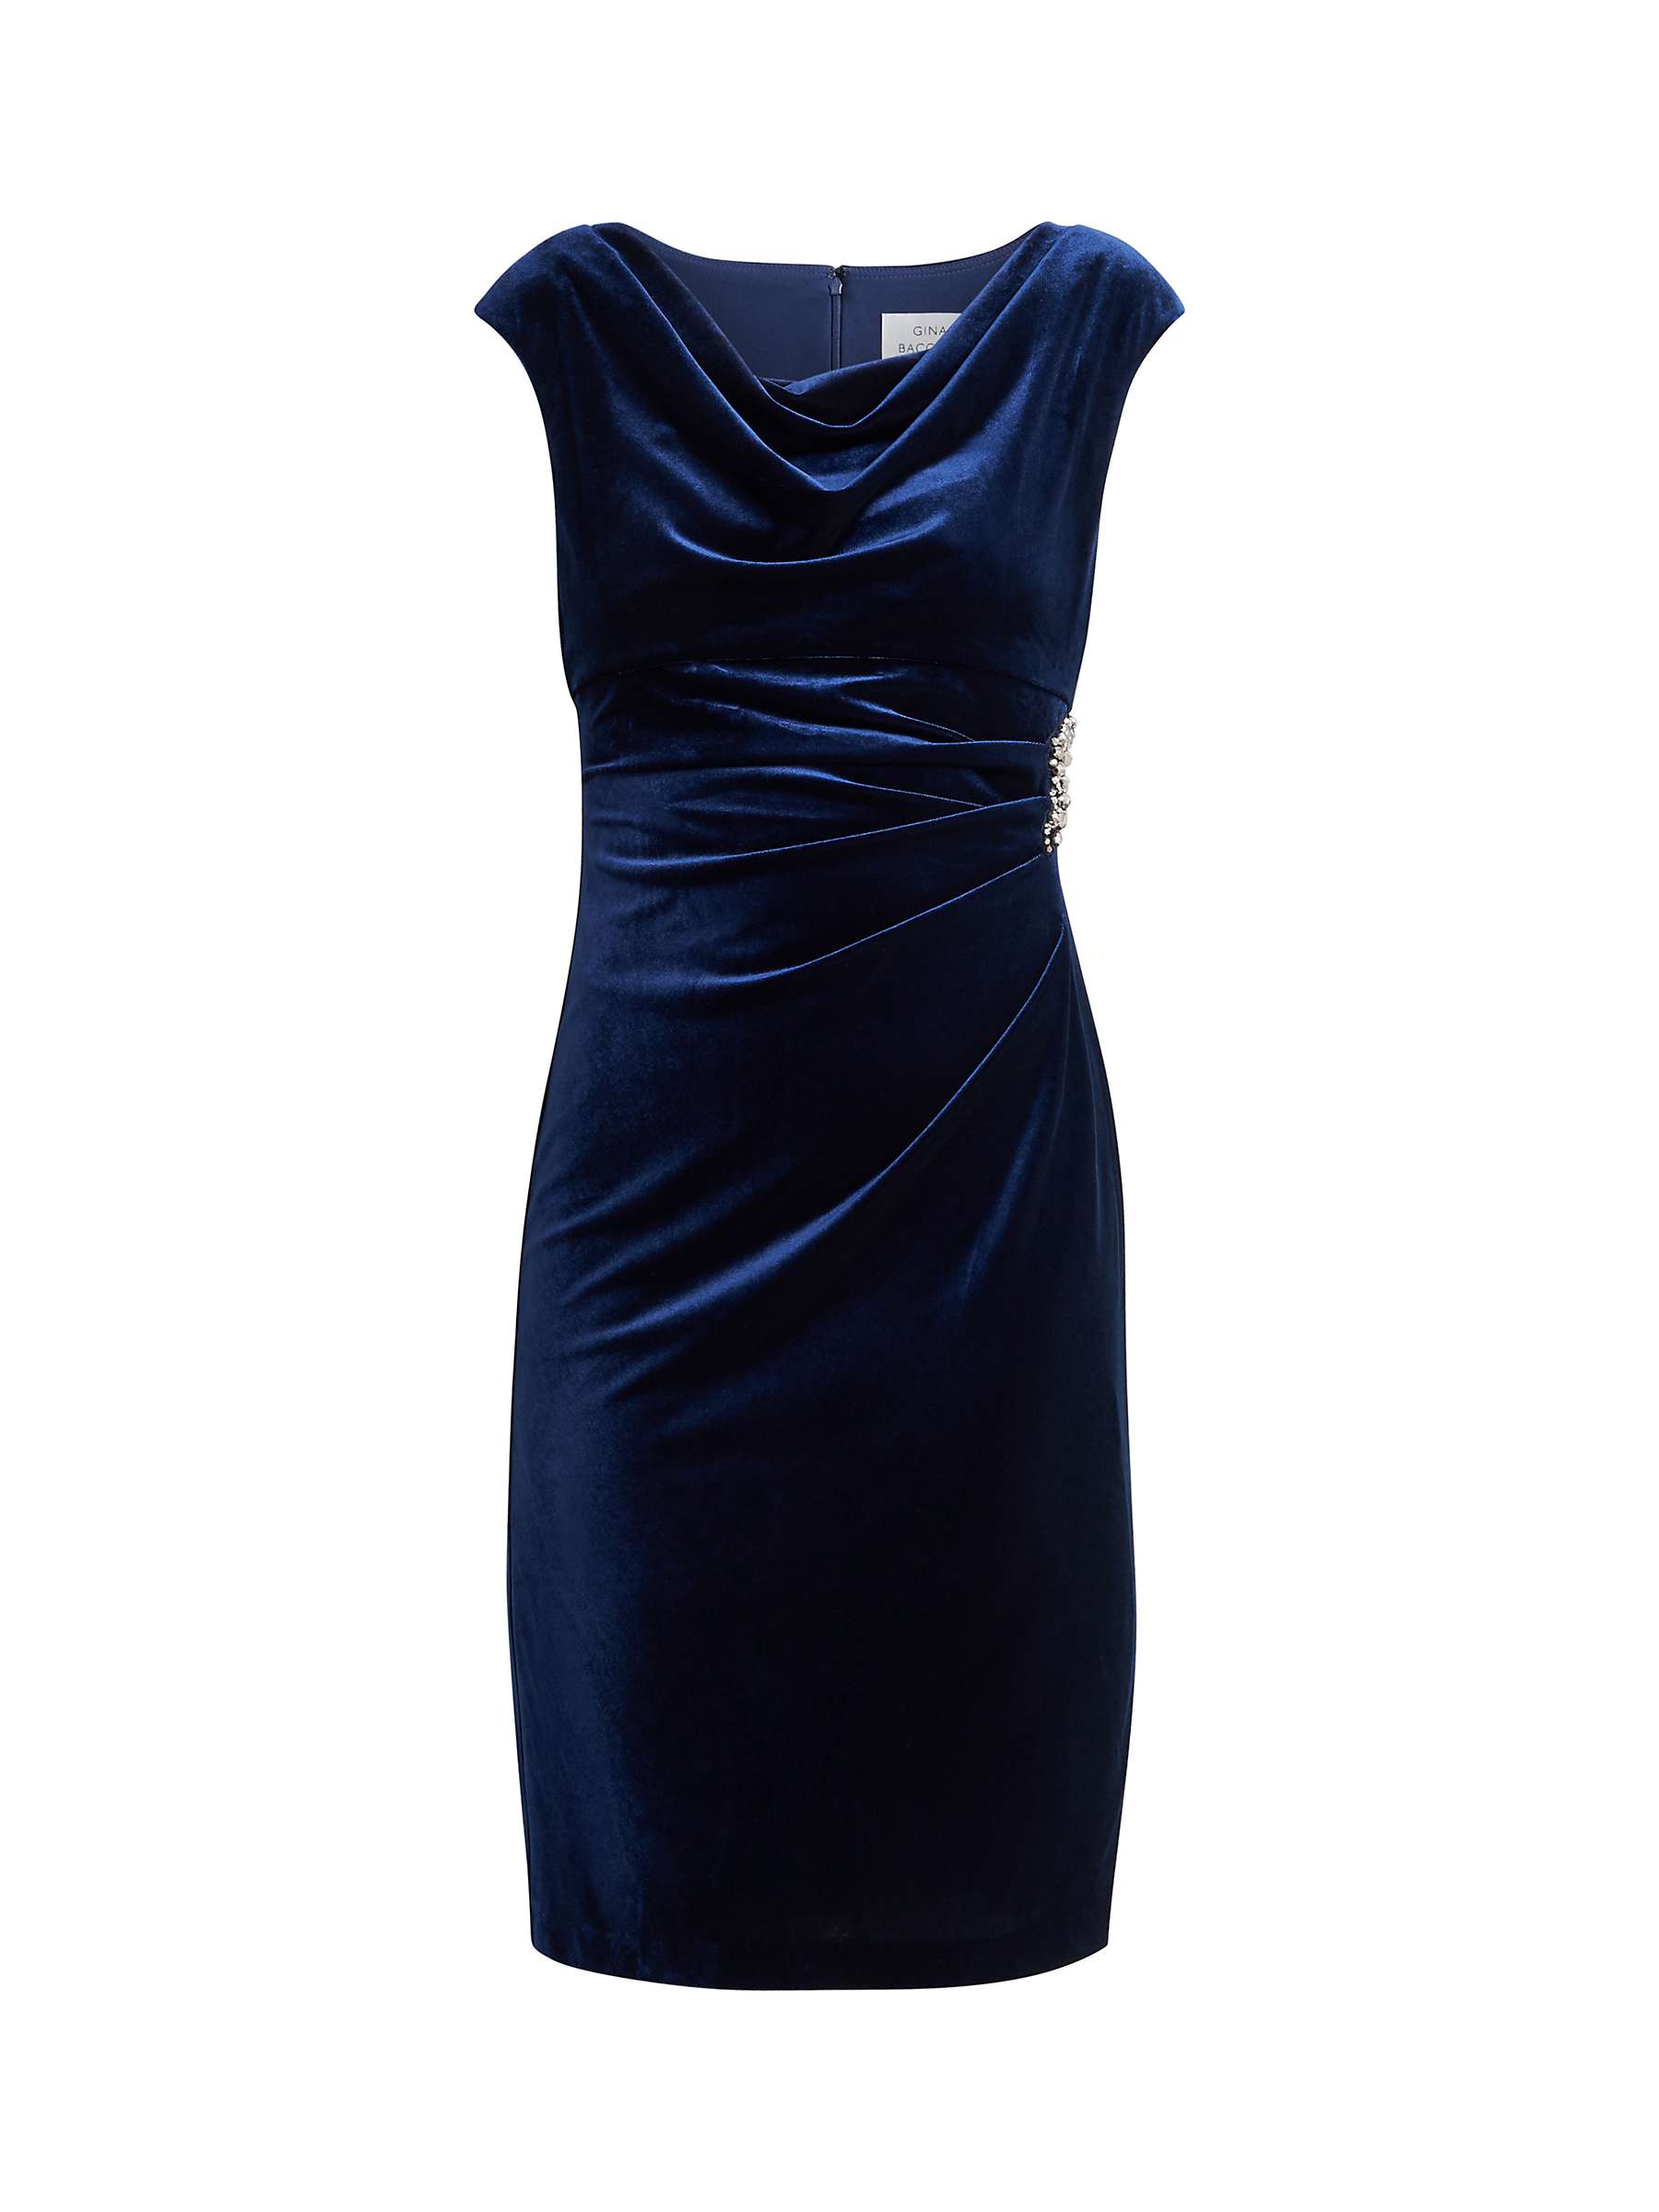 Buy Gina Bacconi Jeanie Velvet Cowl Neck Dress, Imperial Online at johnlewis.com